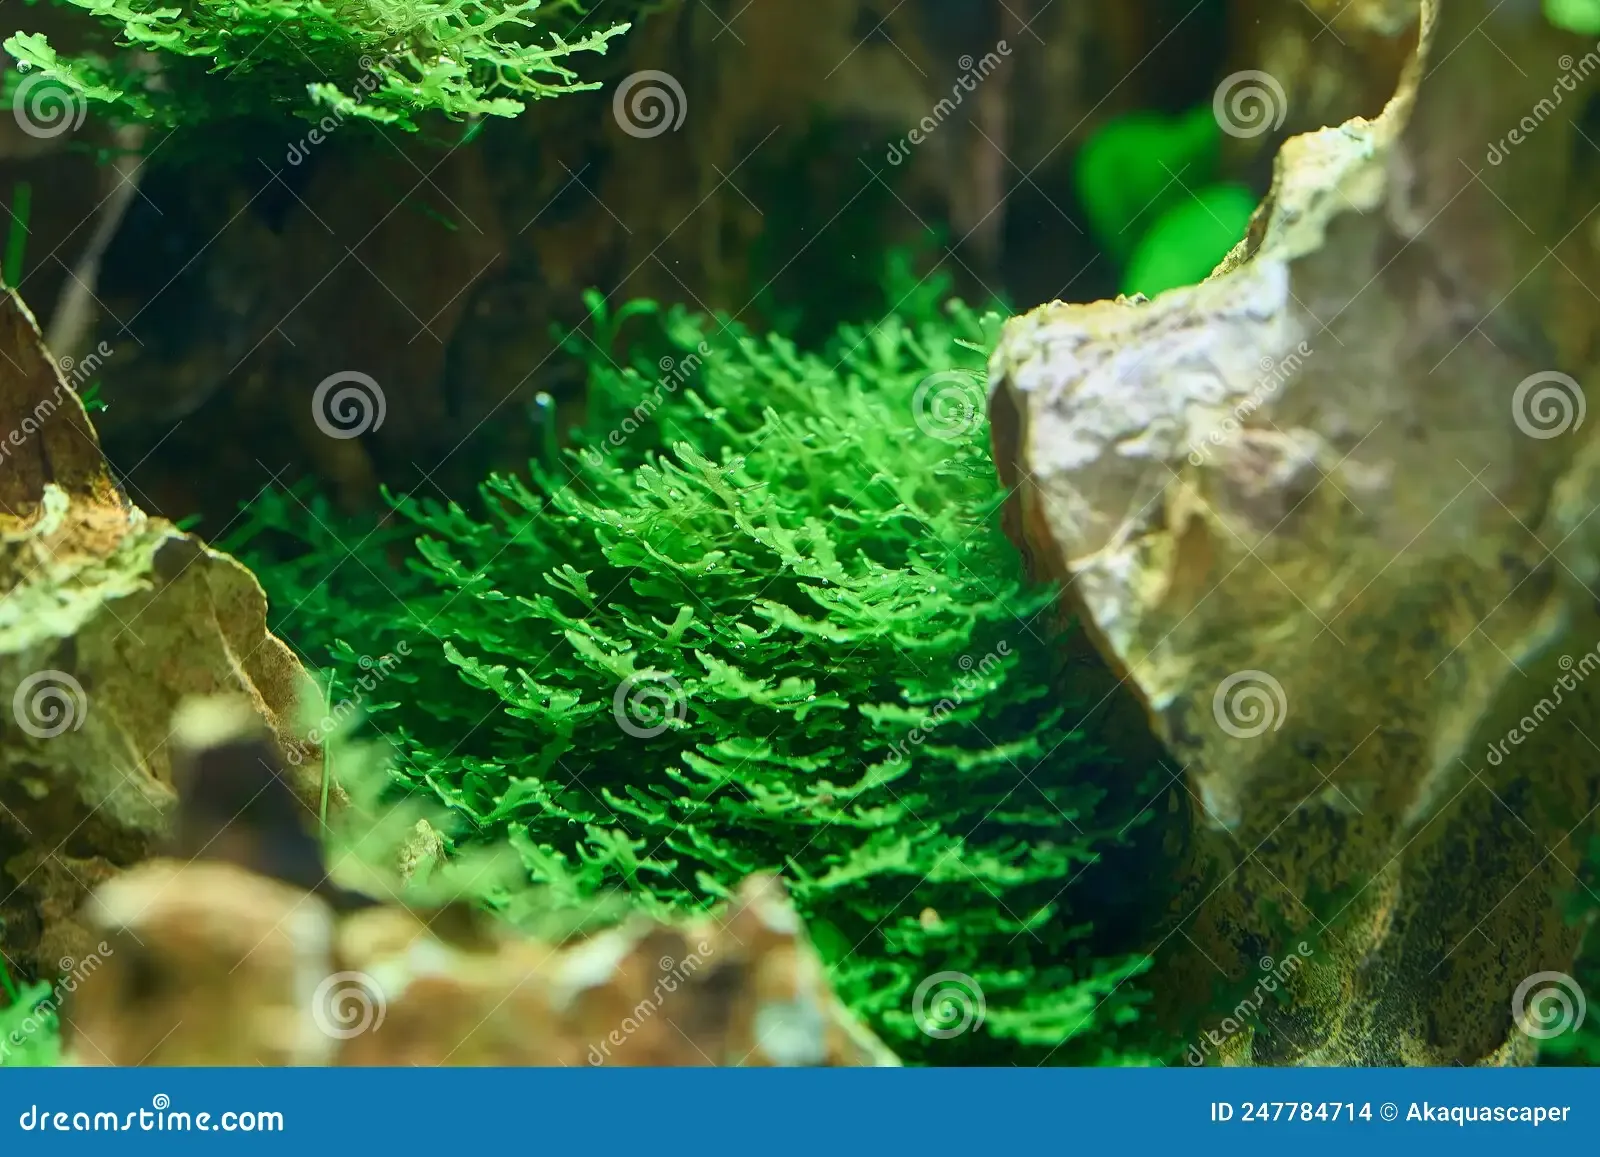 riccardia-aquarium-moss-riccardia-aquarium-moss-dragon-stone-247784714.jpg